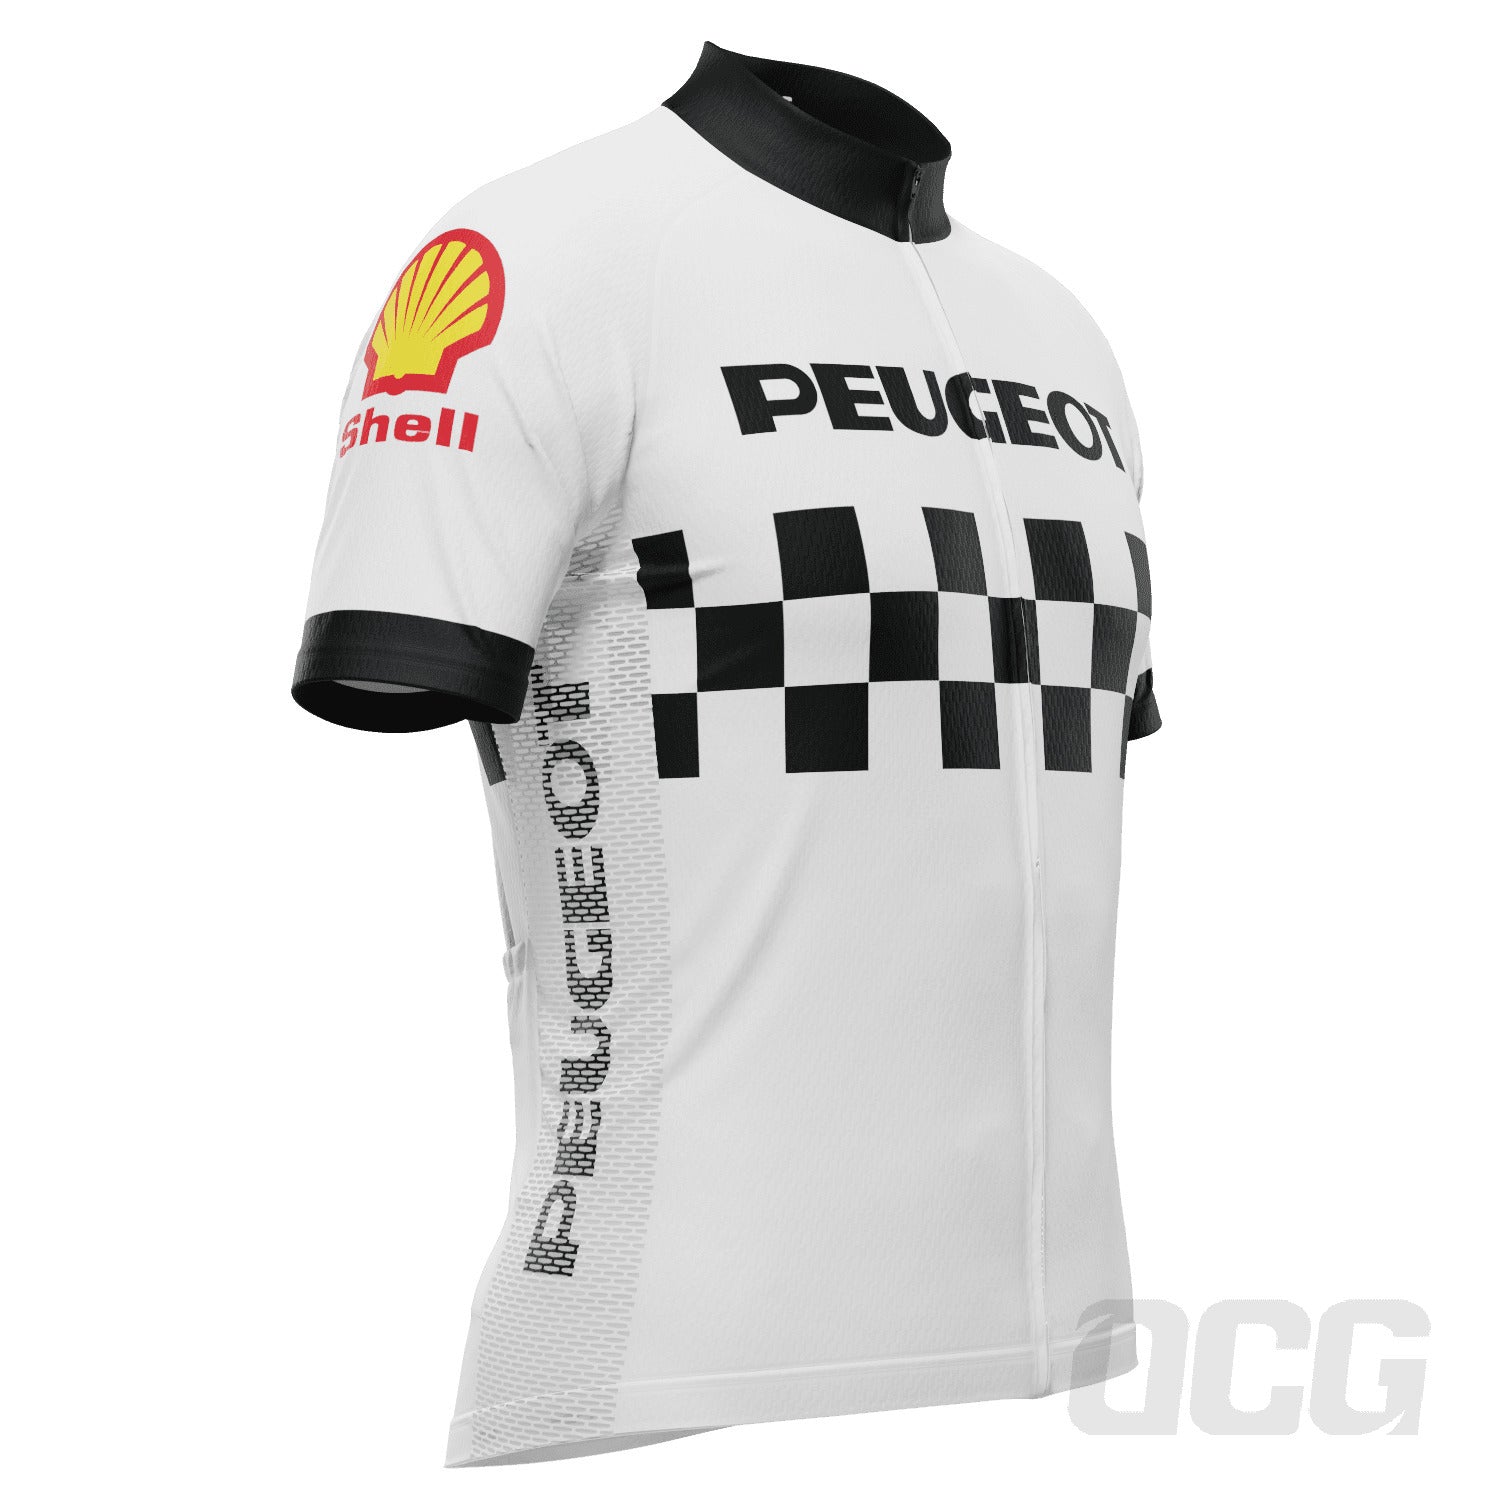 Mens Peugeot Shell Retro1983 Short Sleeve Cycling Jersey